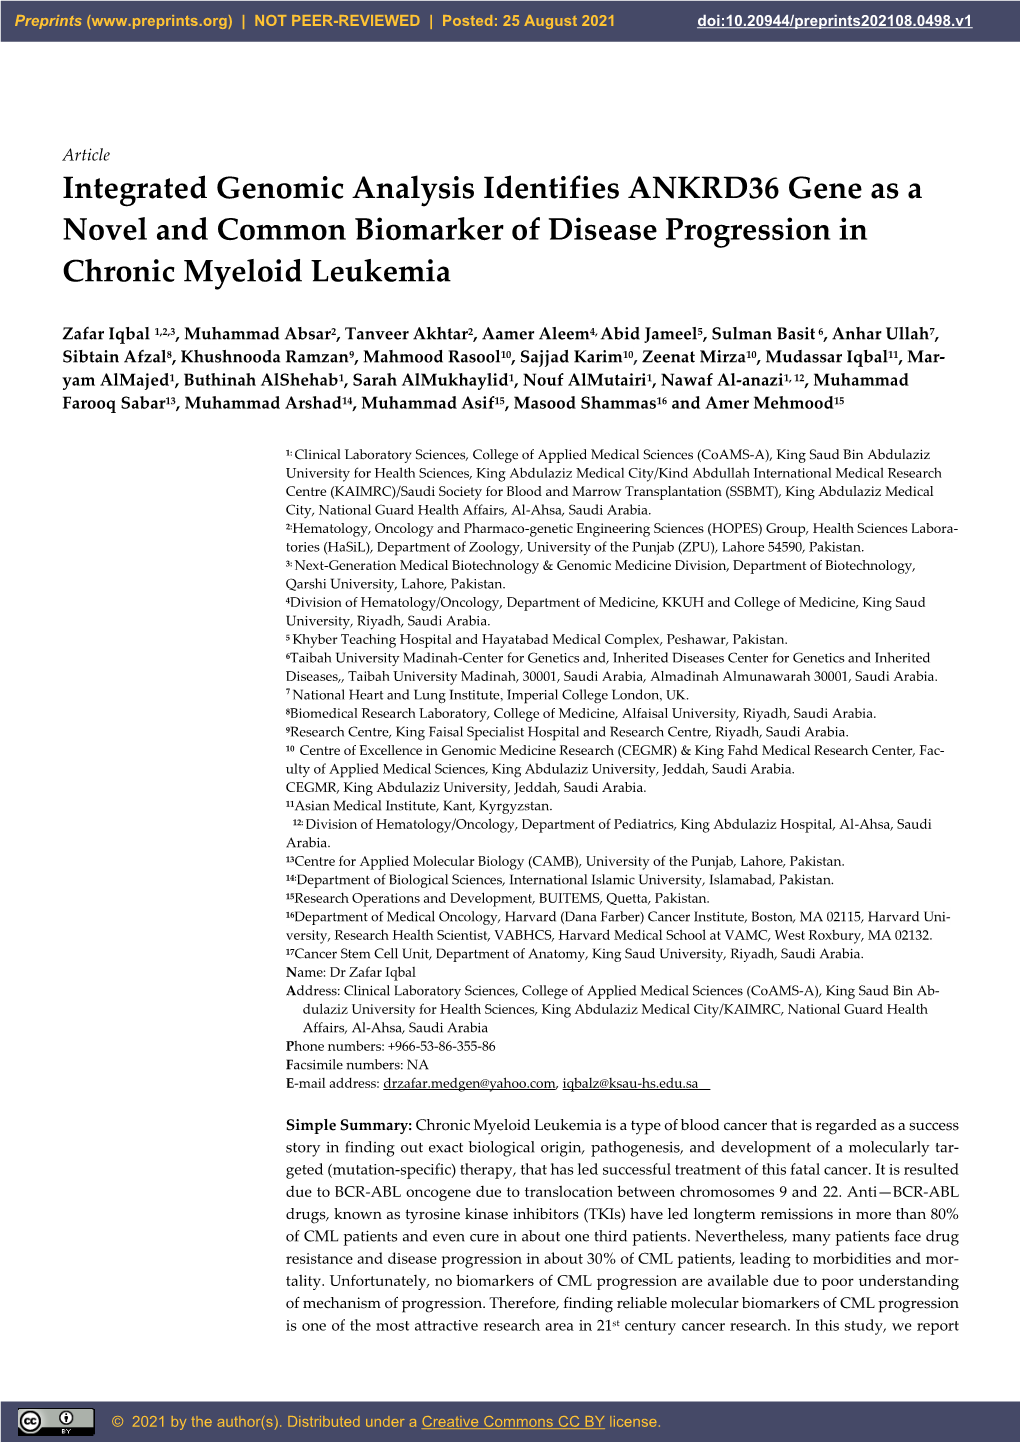 Integrated Genomic Analysis Identifies ANKRD36 Gene As a Novel and Common Biomarker of Disease Progression in Chronic Myeloid Leukemia